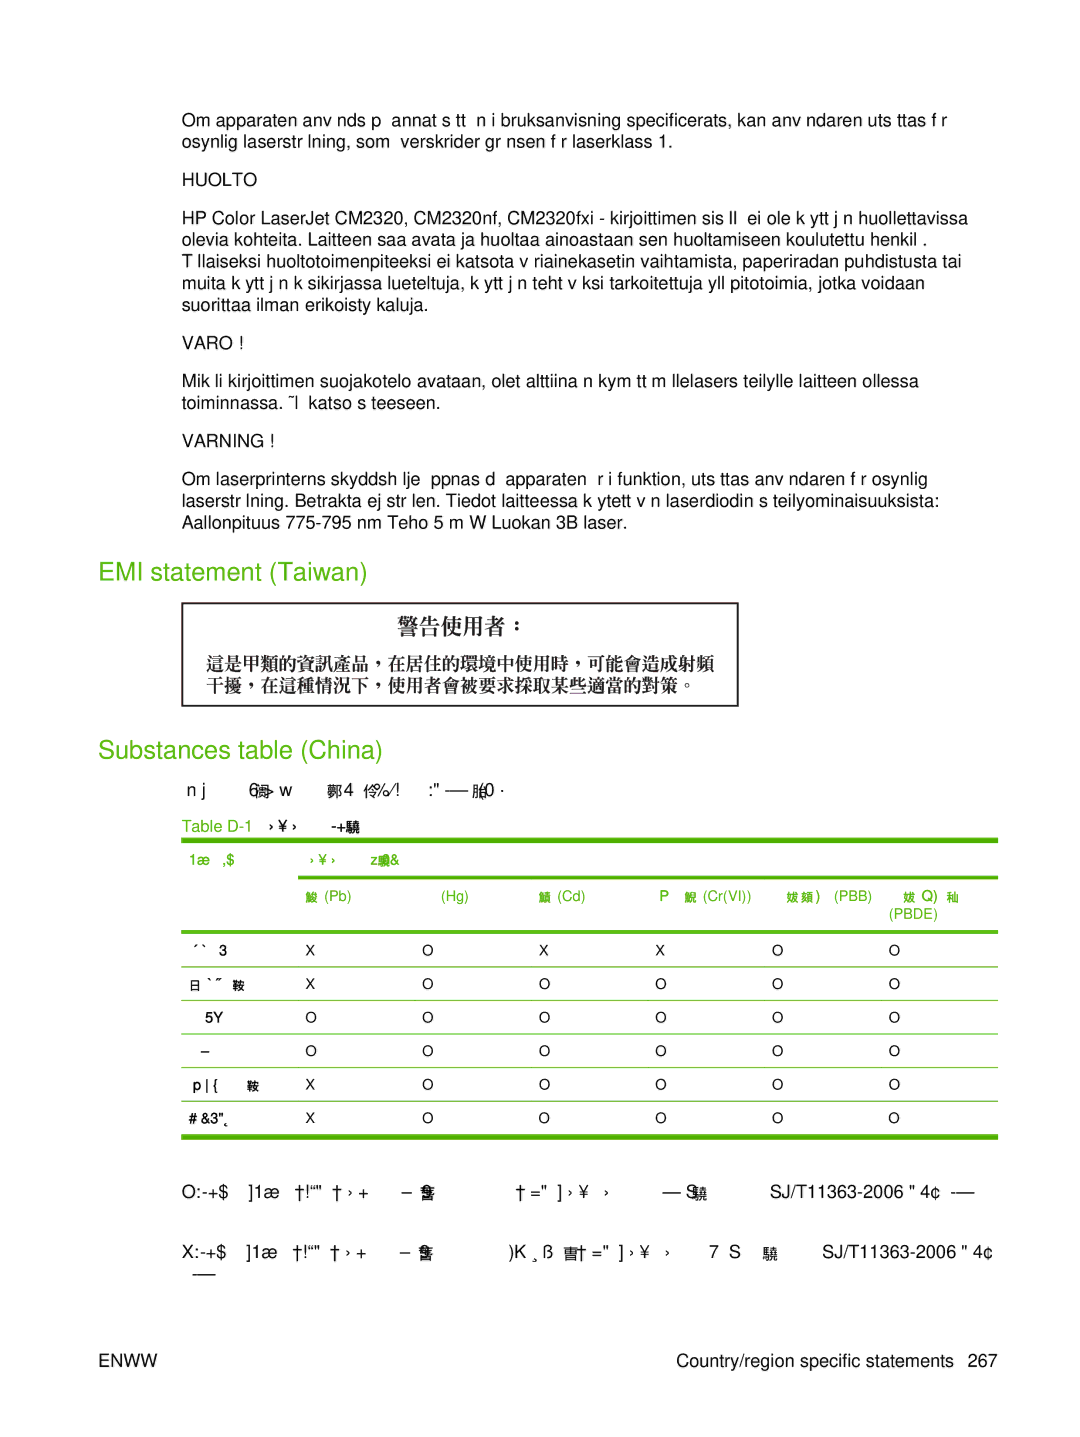 HP CM2320 manual EMI statement Taiwan Substances table China, 六价 铬 CrVI 溴溴 苯 PBB 